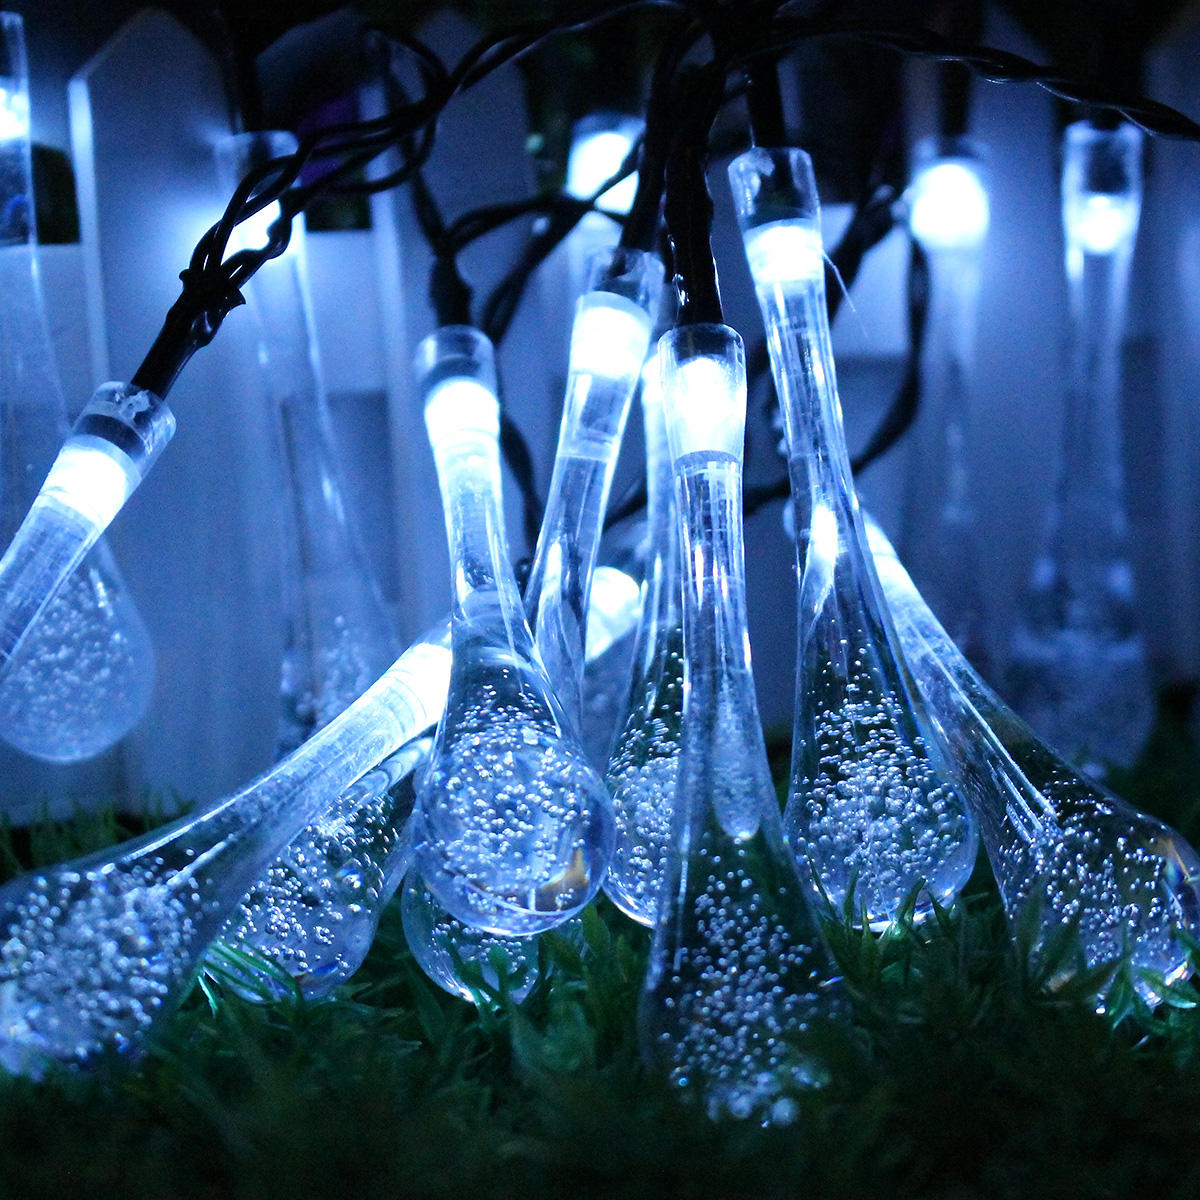 zonne-energie outdoor 50 led droplet fairy string licht bruiloft christmas party home decor lamp dc3v